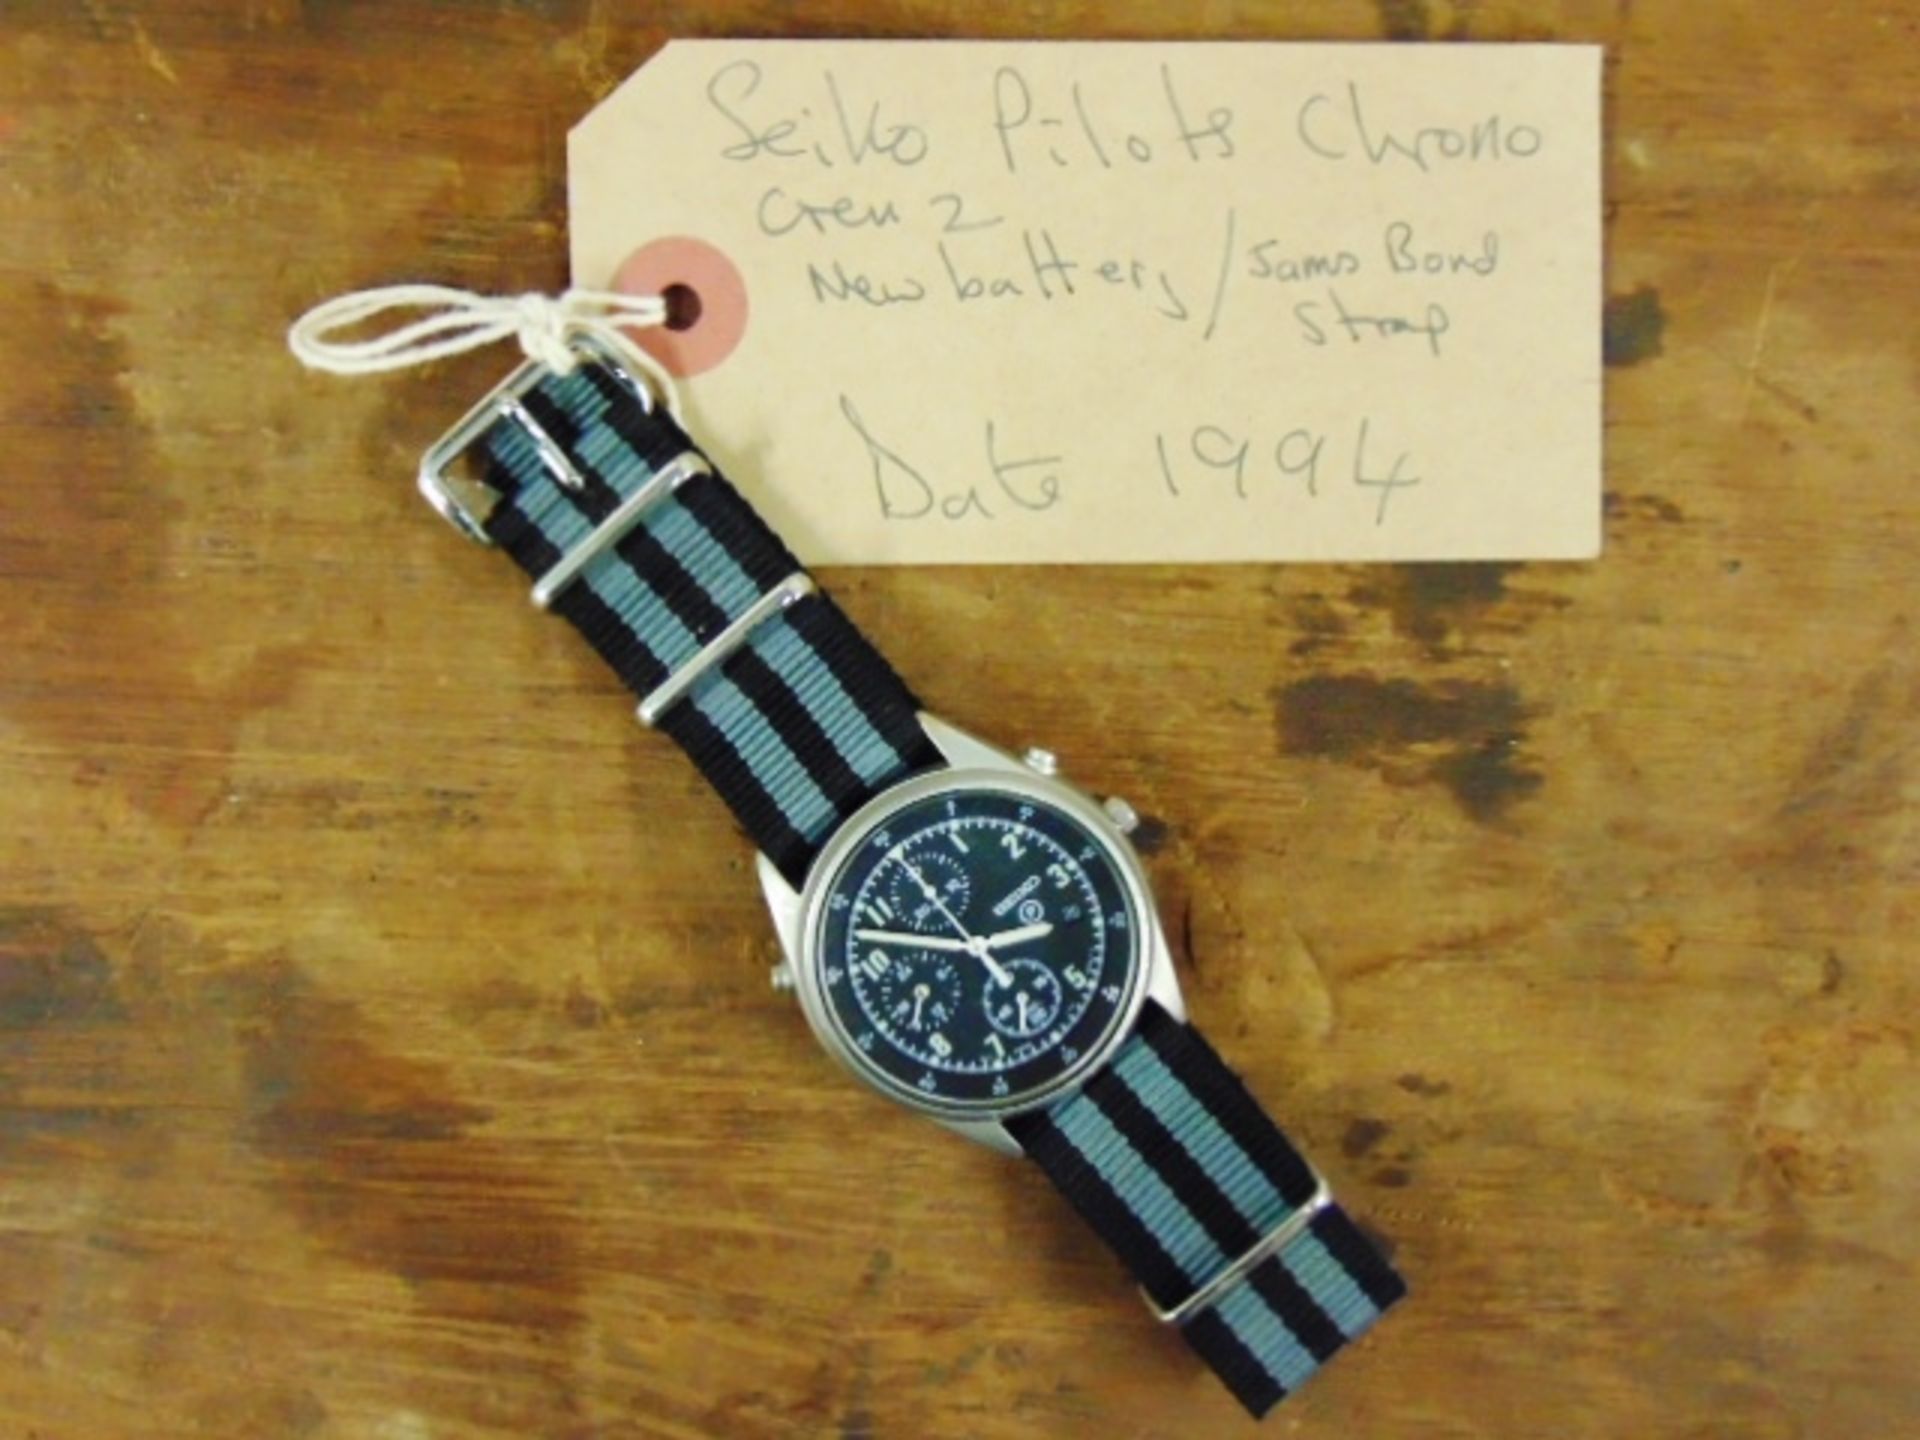 Seiko Pilots Chronograph Generation 2 - Image 2 of 6